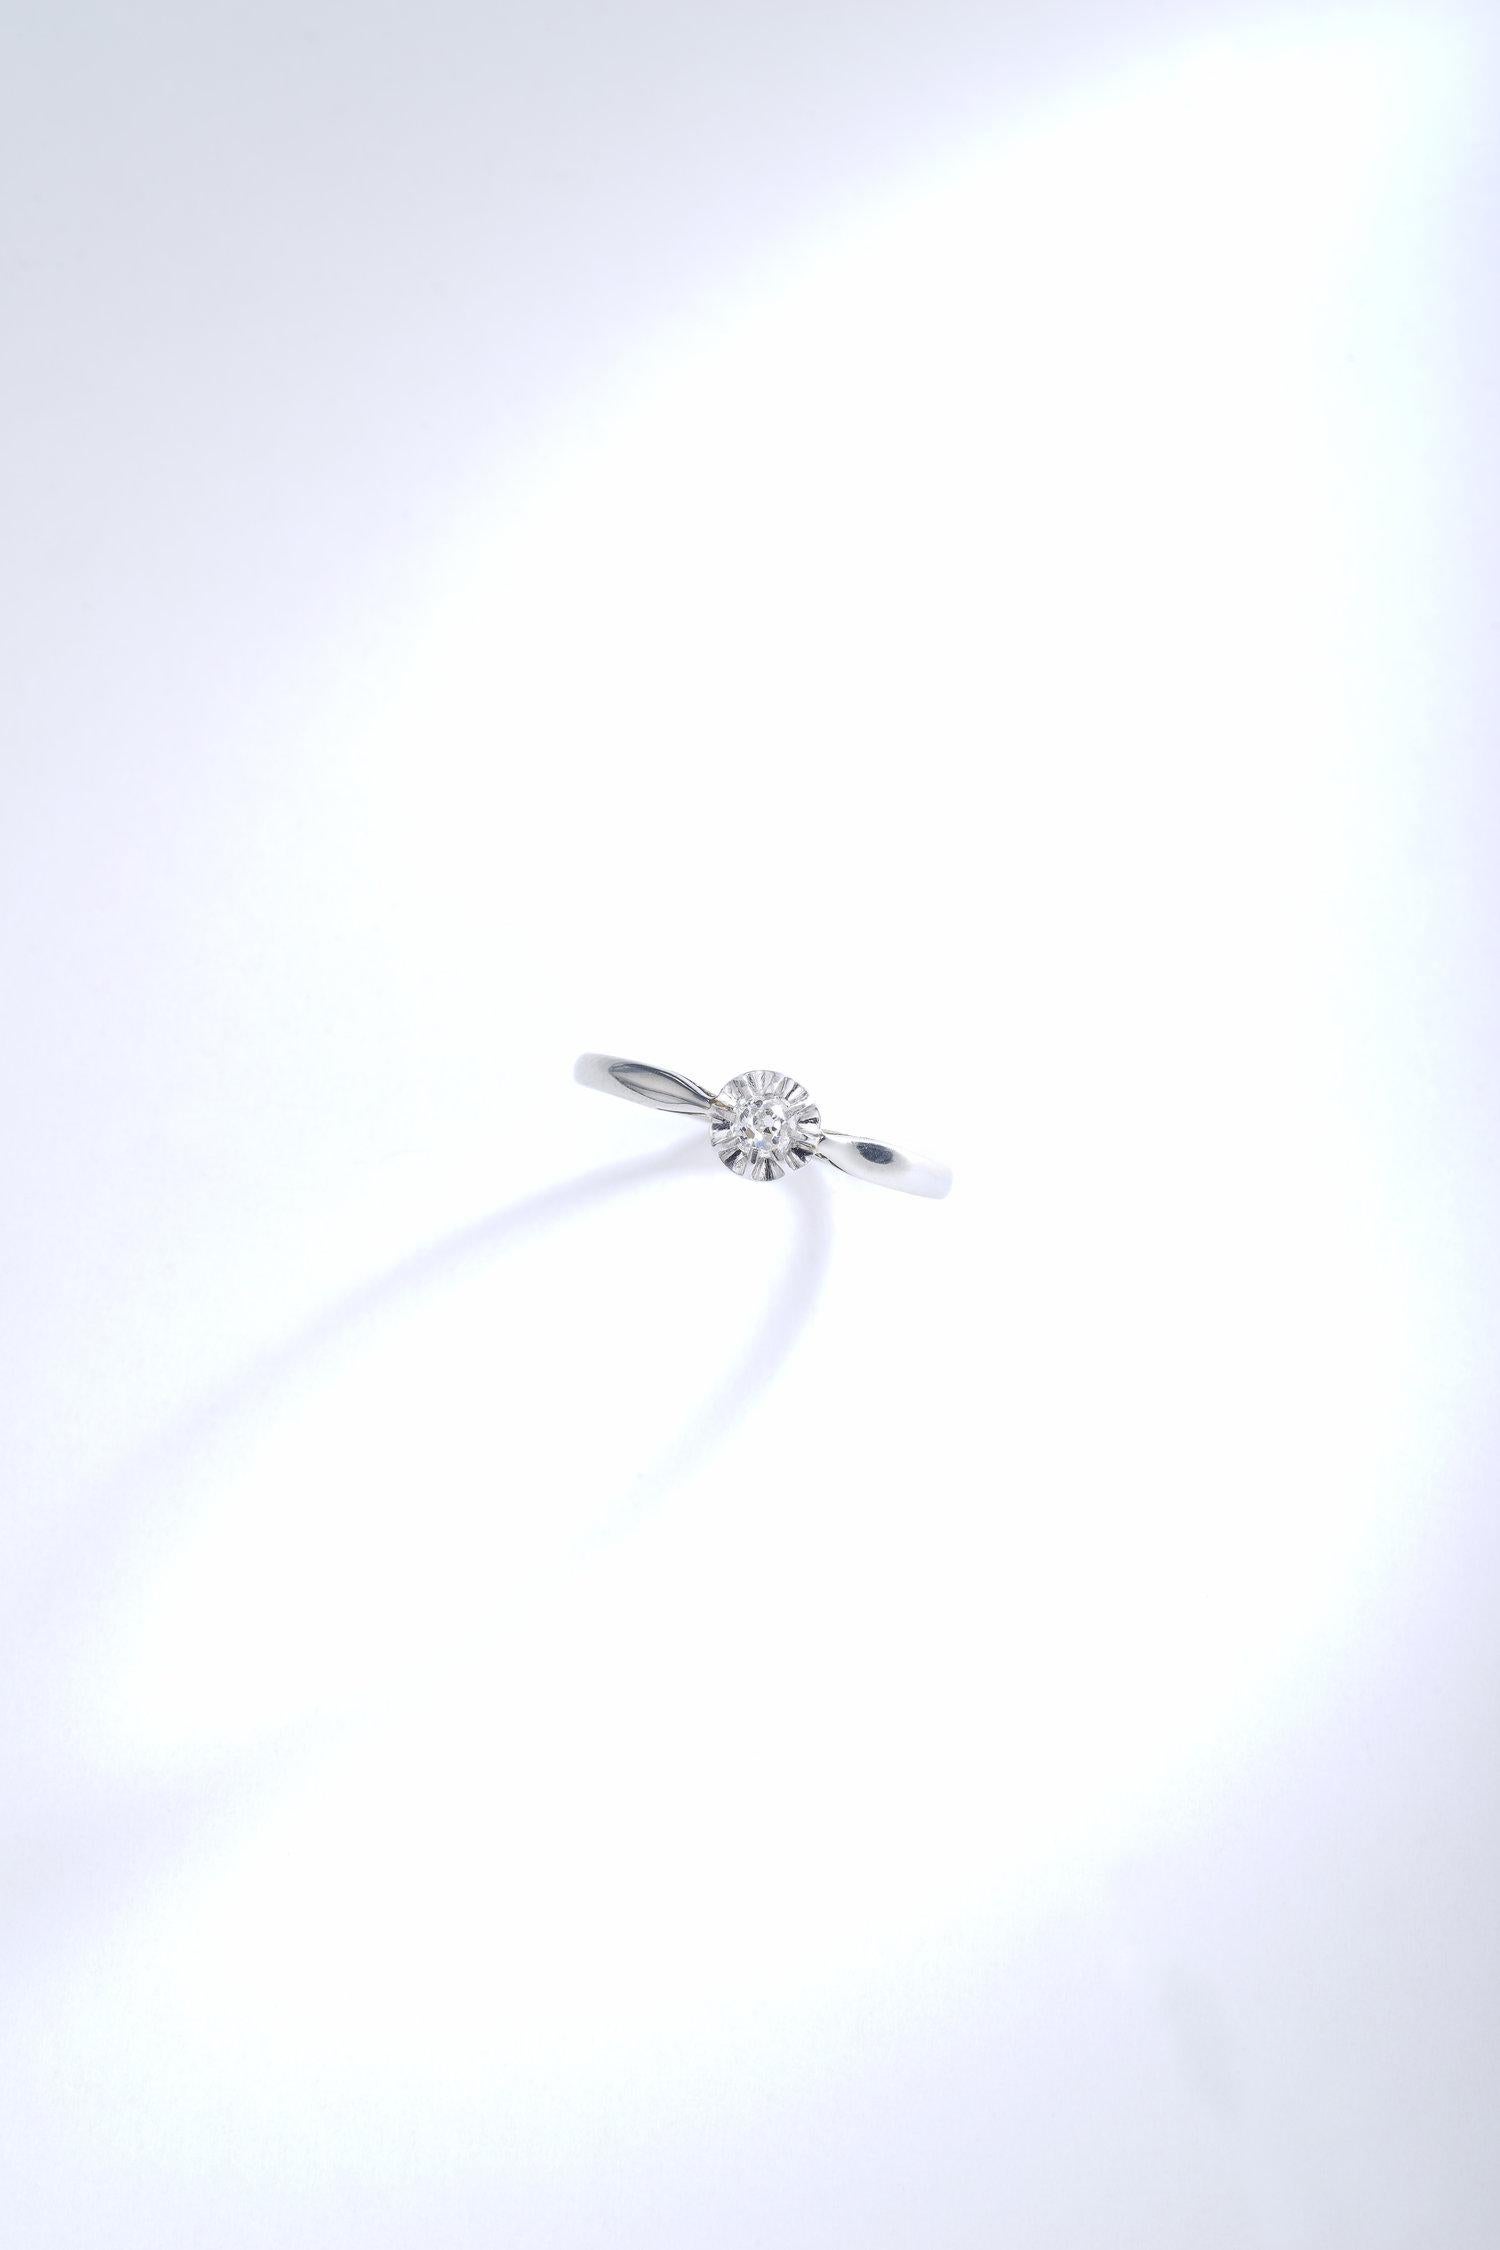 Antique Diamond 0.20 carat Platinum and white Gold Ring. French marks. Circa 1900.